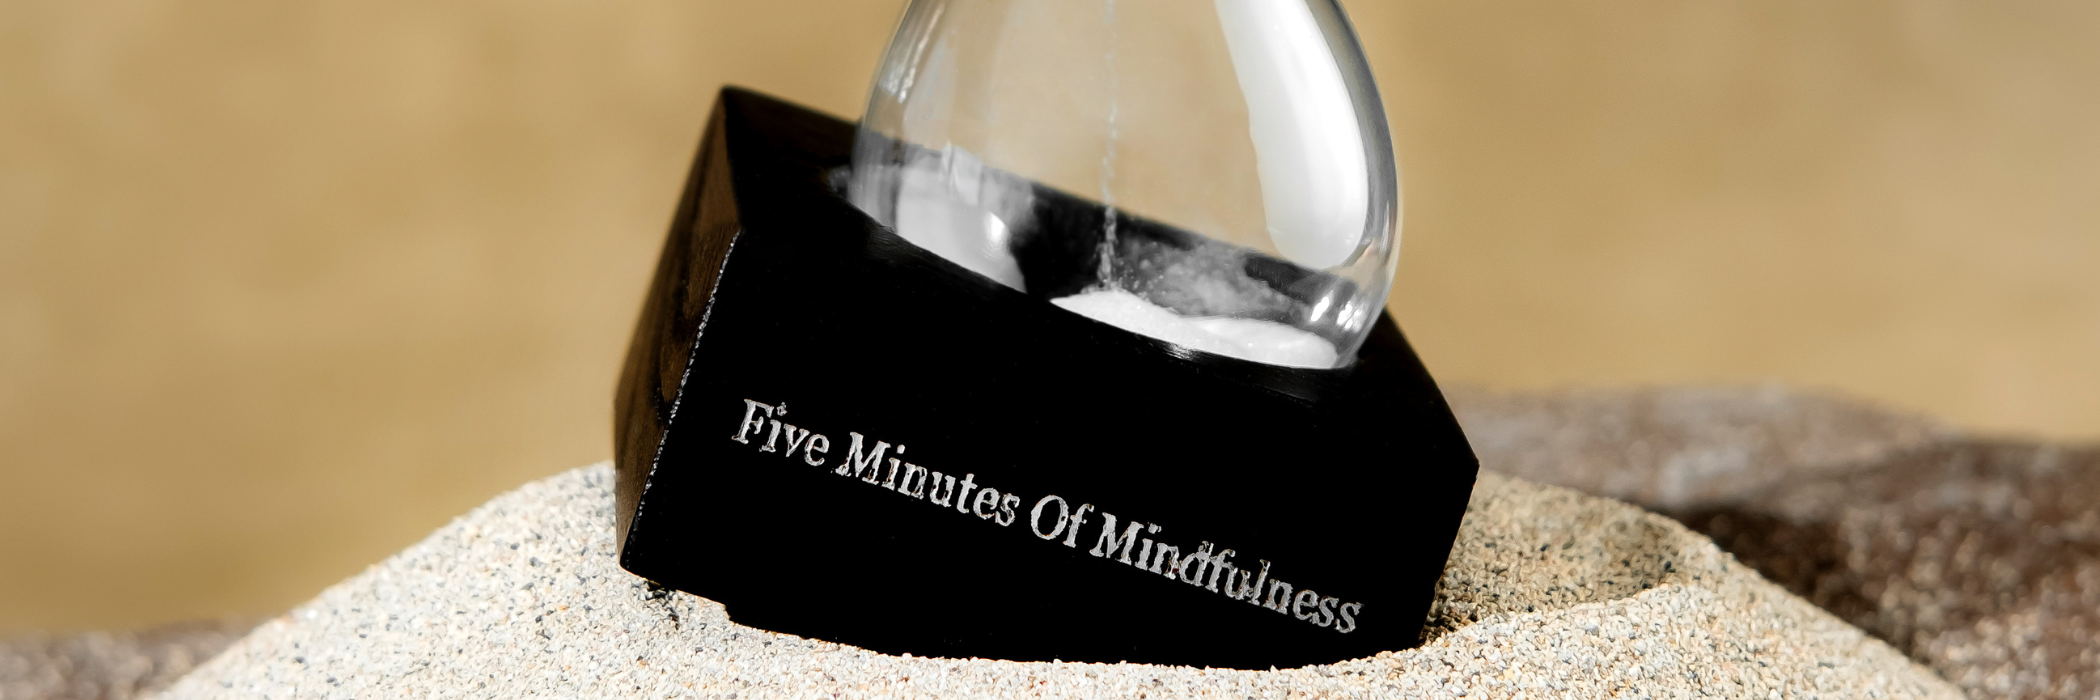 Raffles Bali - The Five Minutes of Mindfulness Sand Clock